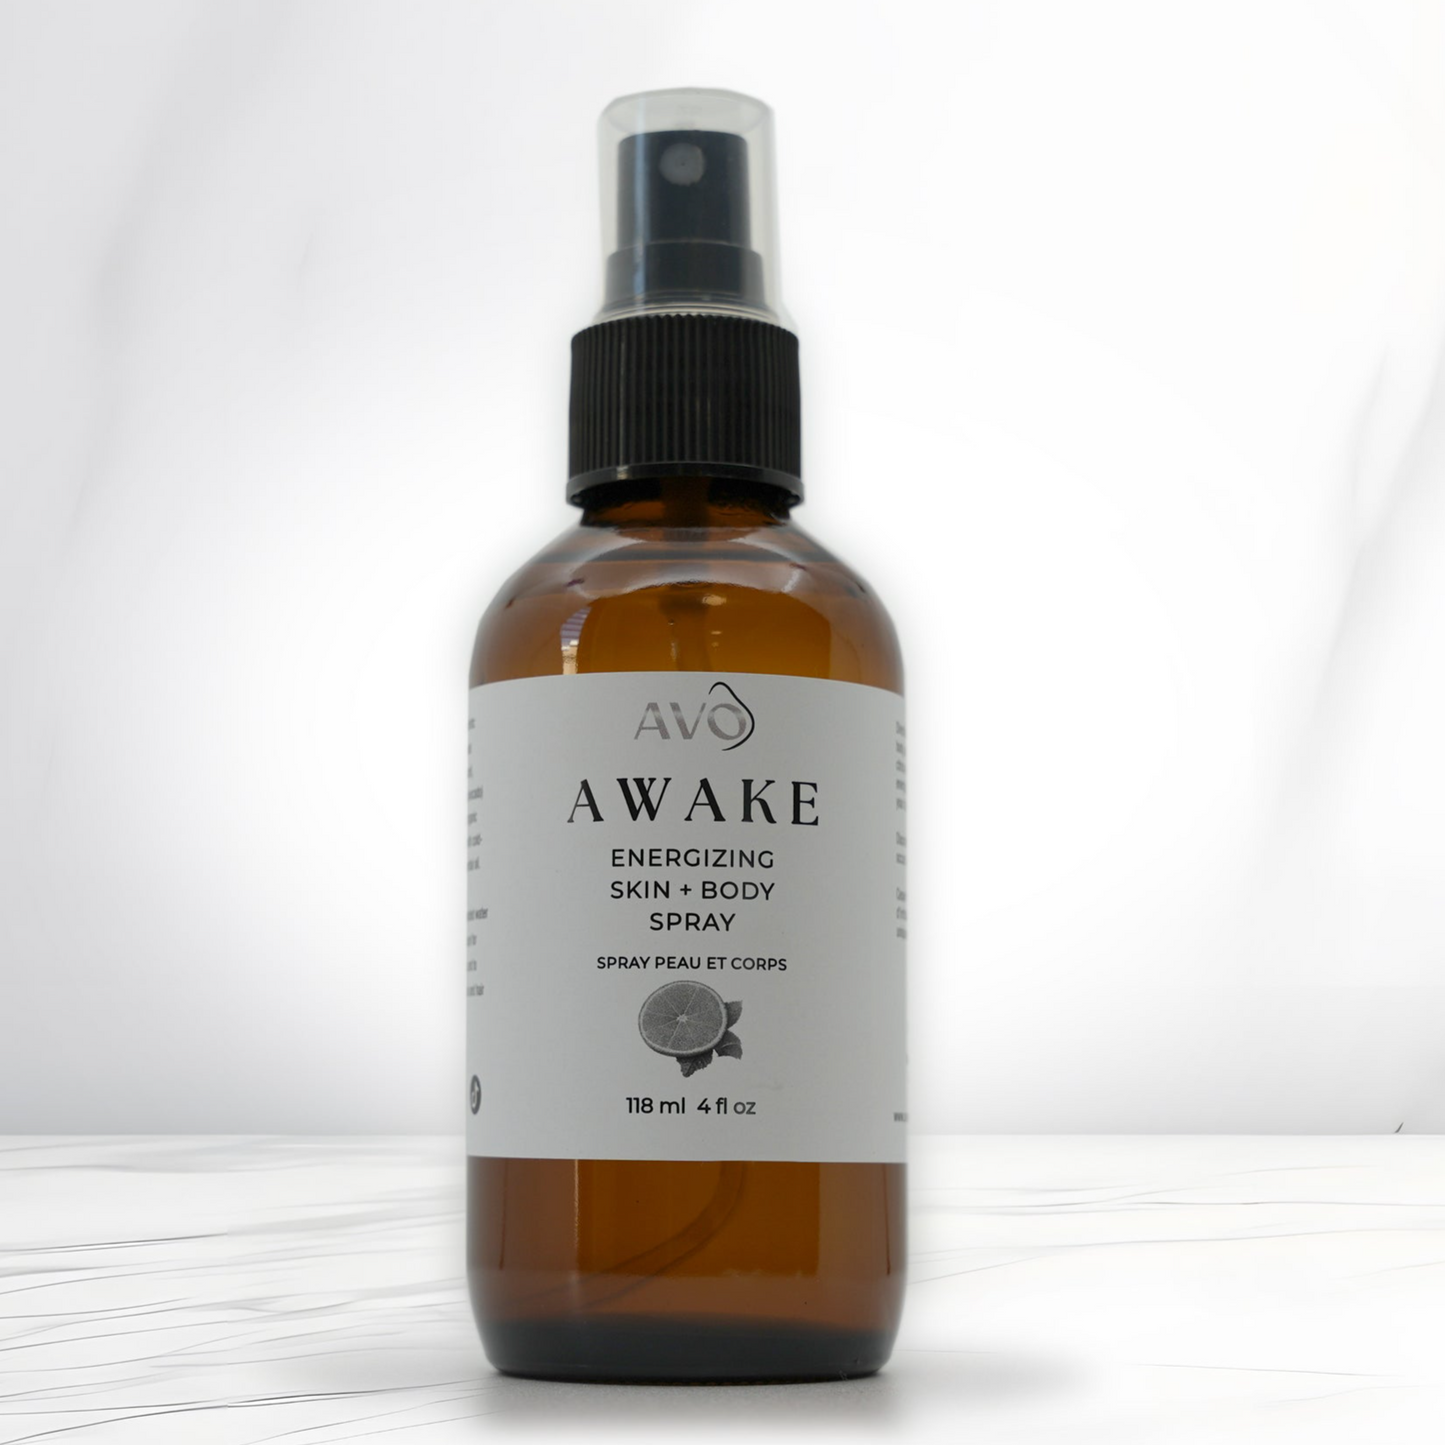 AWAKE Energizing Skin + Body Spray 4oz